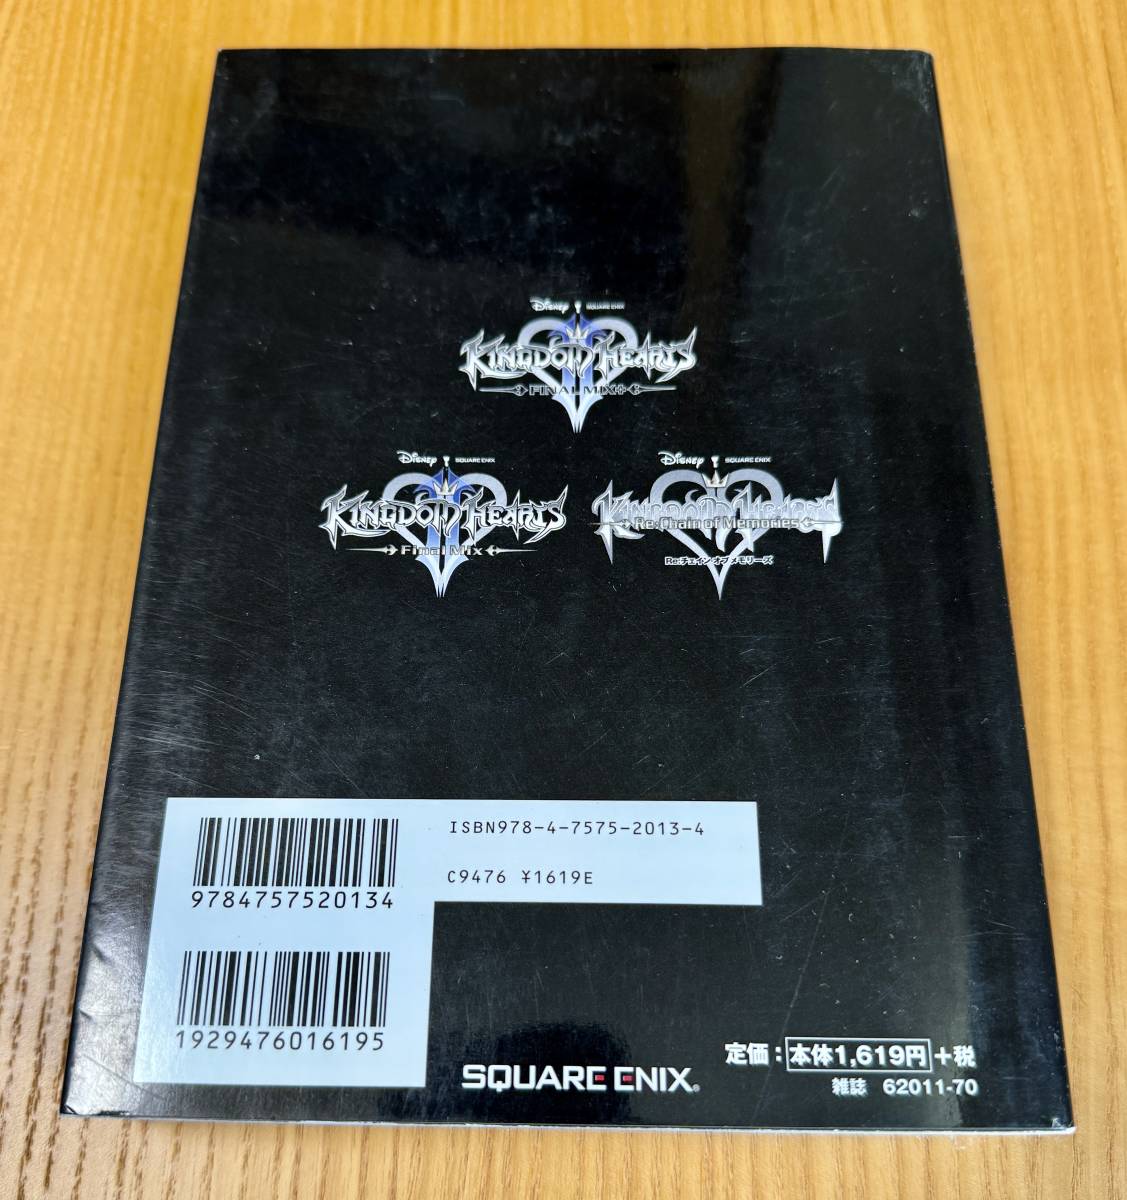 KINGDOM HEARTS II FINAL MIX+ ultima niaSQUARE ENIX / Kingdom Hearts 2 KH2faina Lumix capture book sk wear * enix 